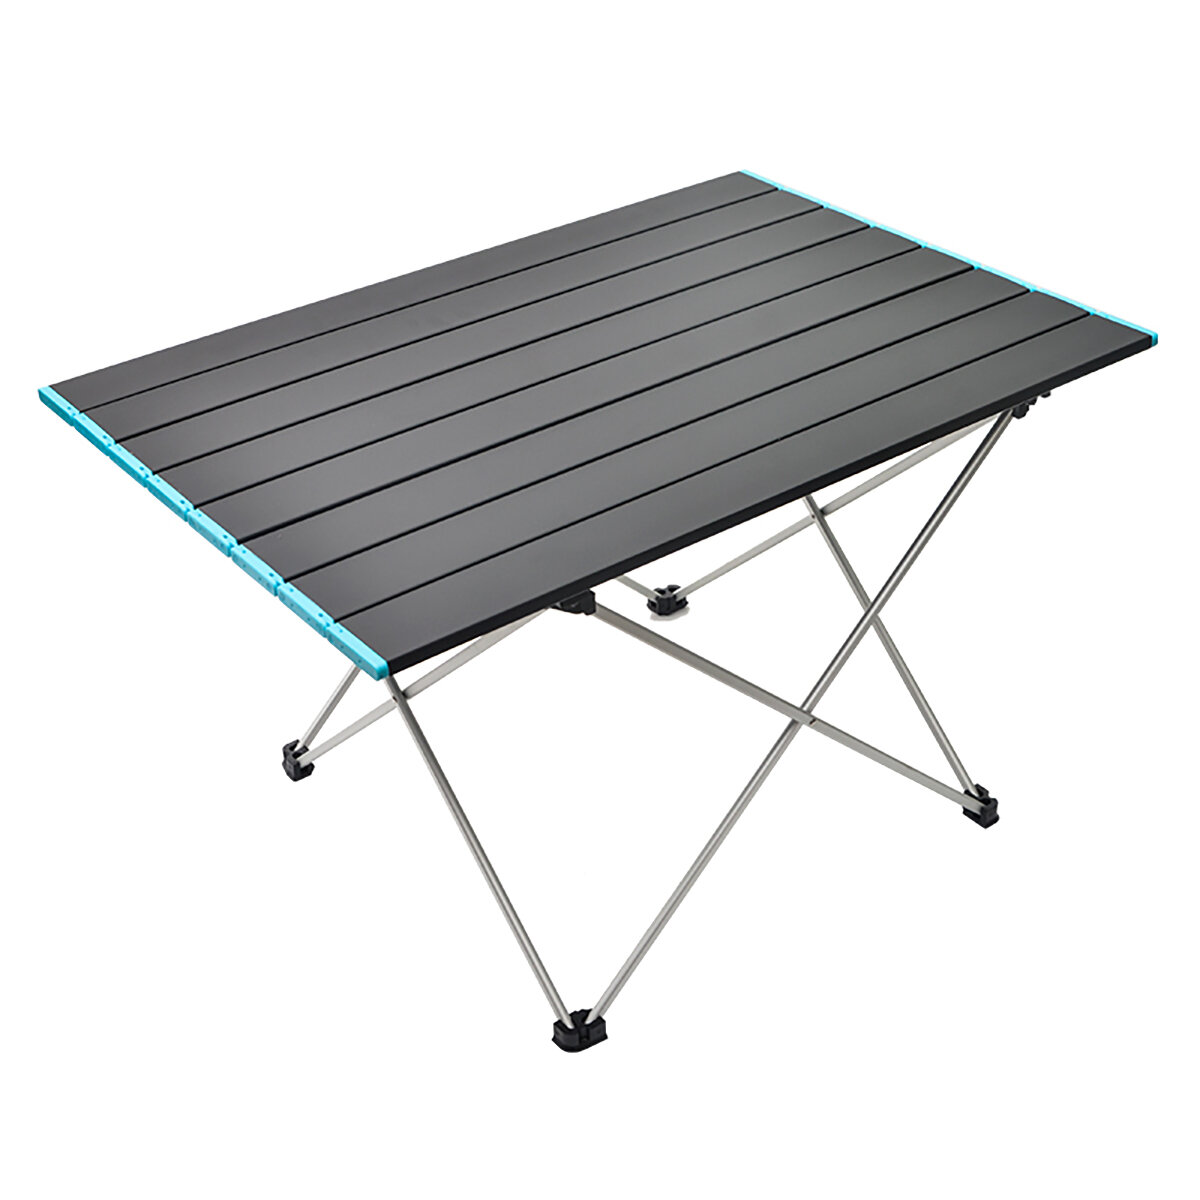 Table pliante extérieure en alliage d'aluminium Portable pique-nique ultra-léger Camping plaque en aluminium bureau Barbecue meubles autonomes